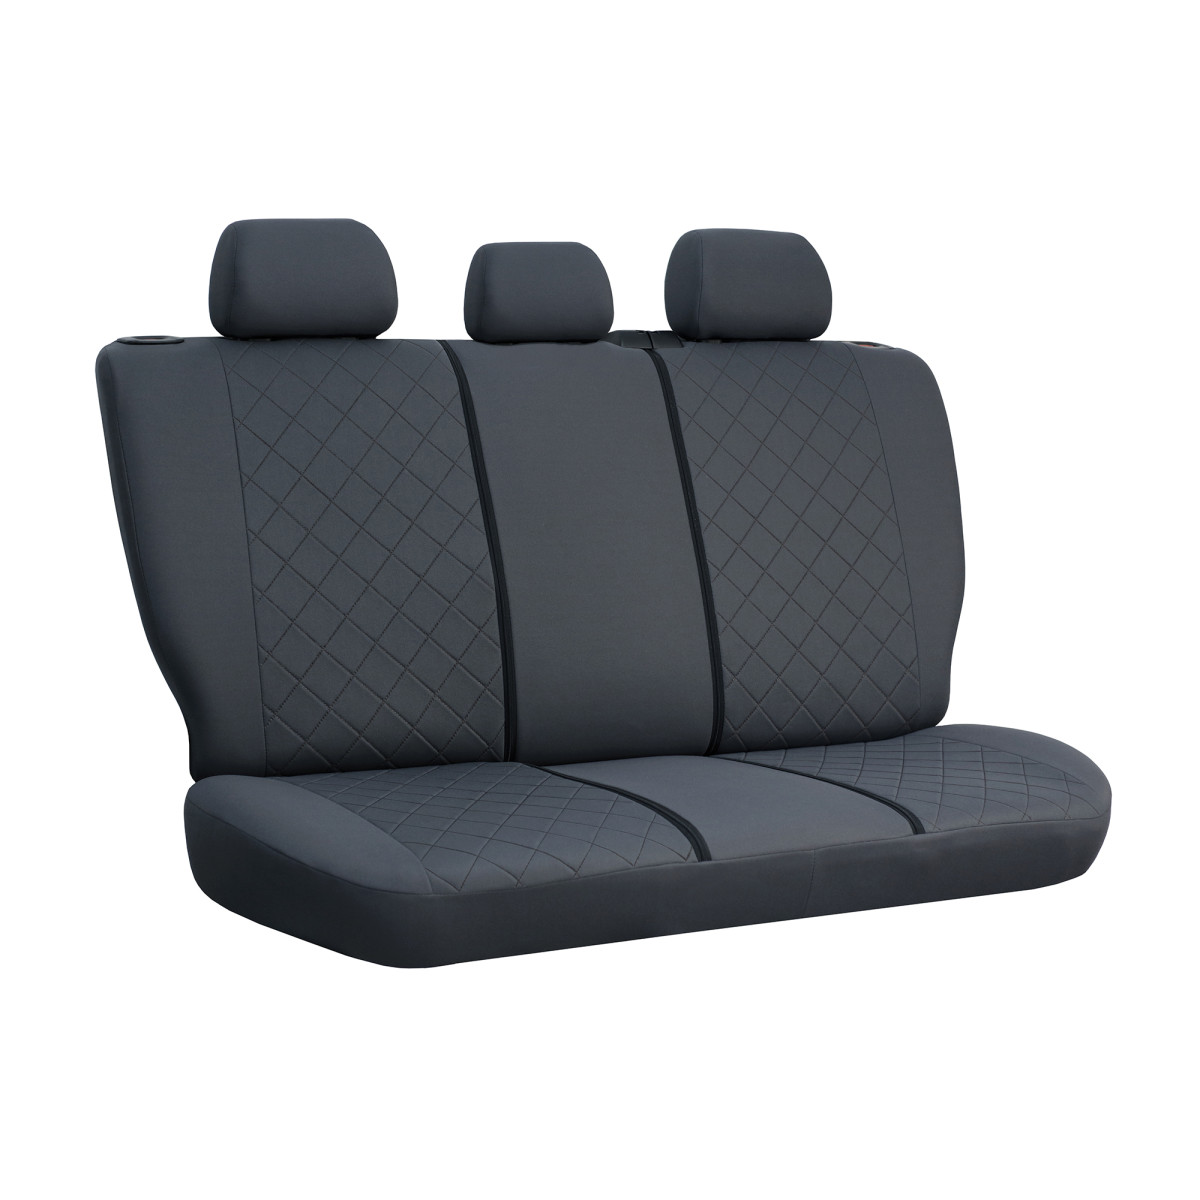 https://www.openauto.de/image/cache/catalog/products/4d43cec3d9d129dca1ebeffeb43c30bf/draft-line-rear-seats-1200x1200.jpg